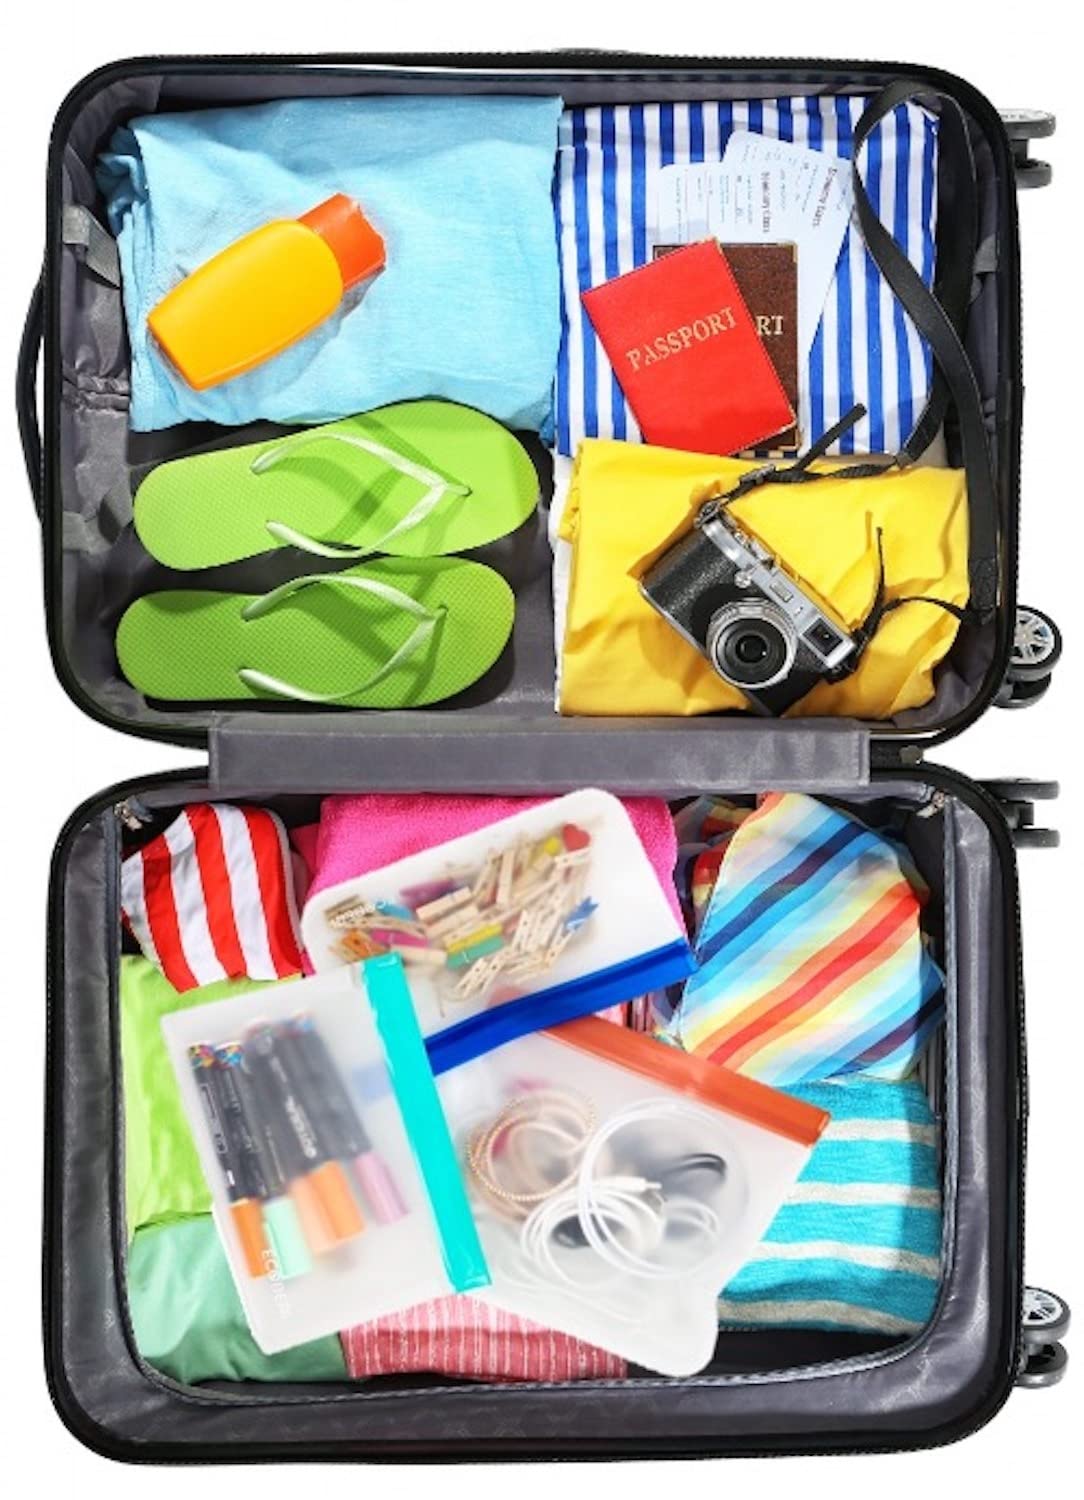 14 Pack Ecoberi Reusable Food Storage Bags, Leakproof, Freezer Bag, Sandwich, Snack, Travel Bag, Easy Zip Closure (Multi-14)